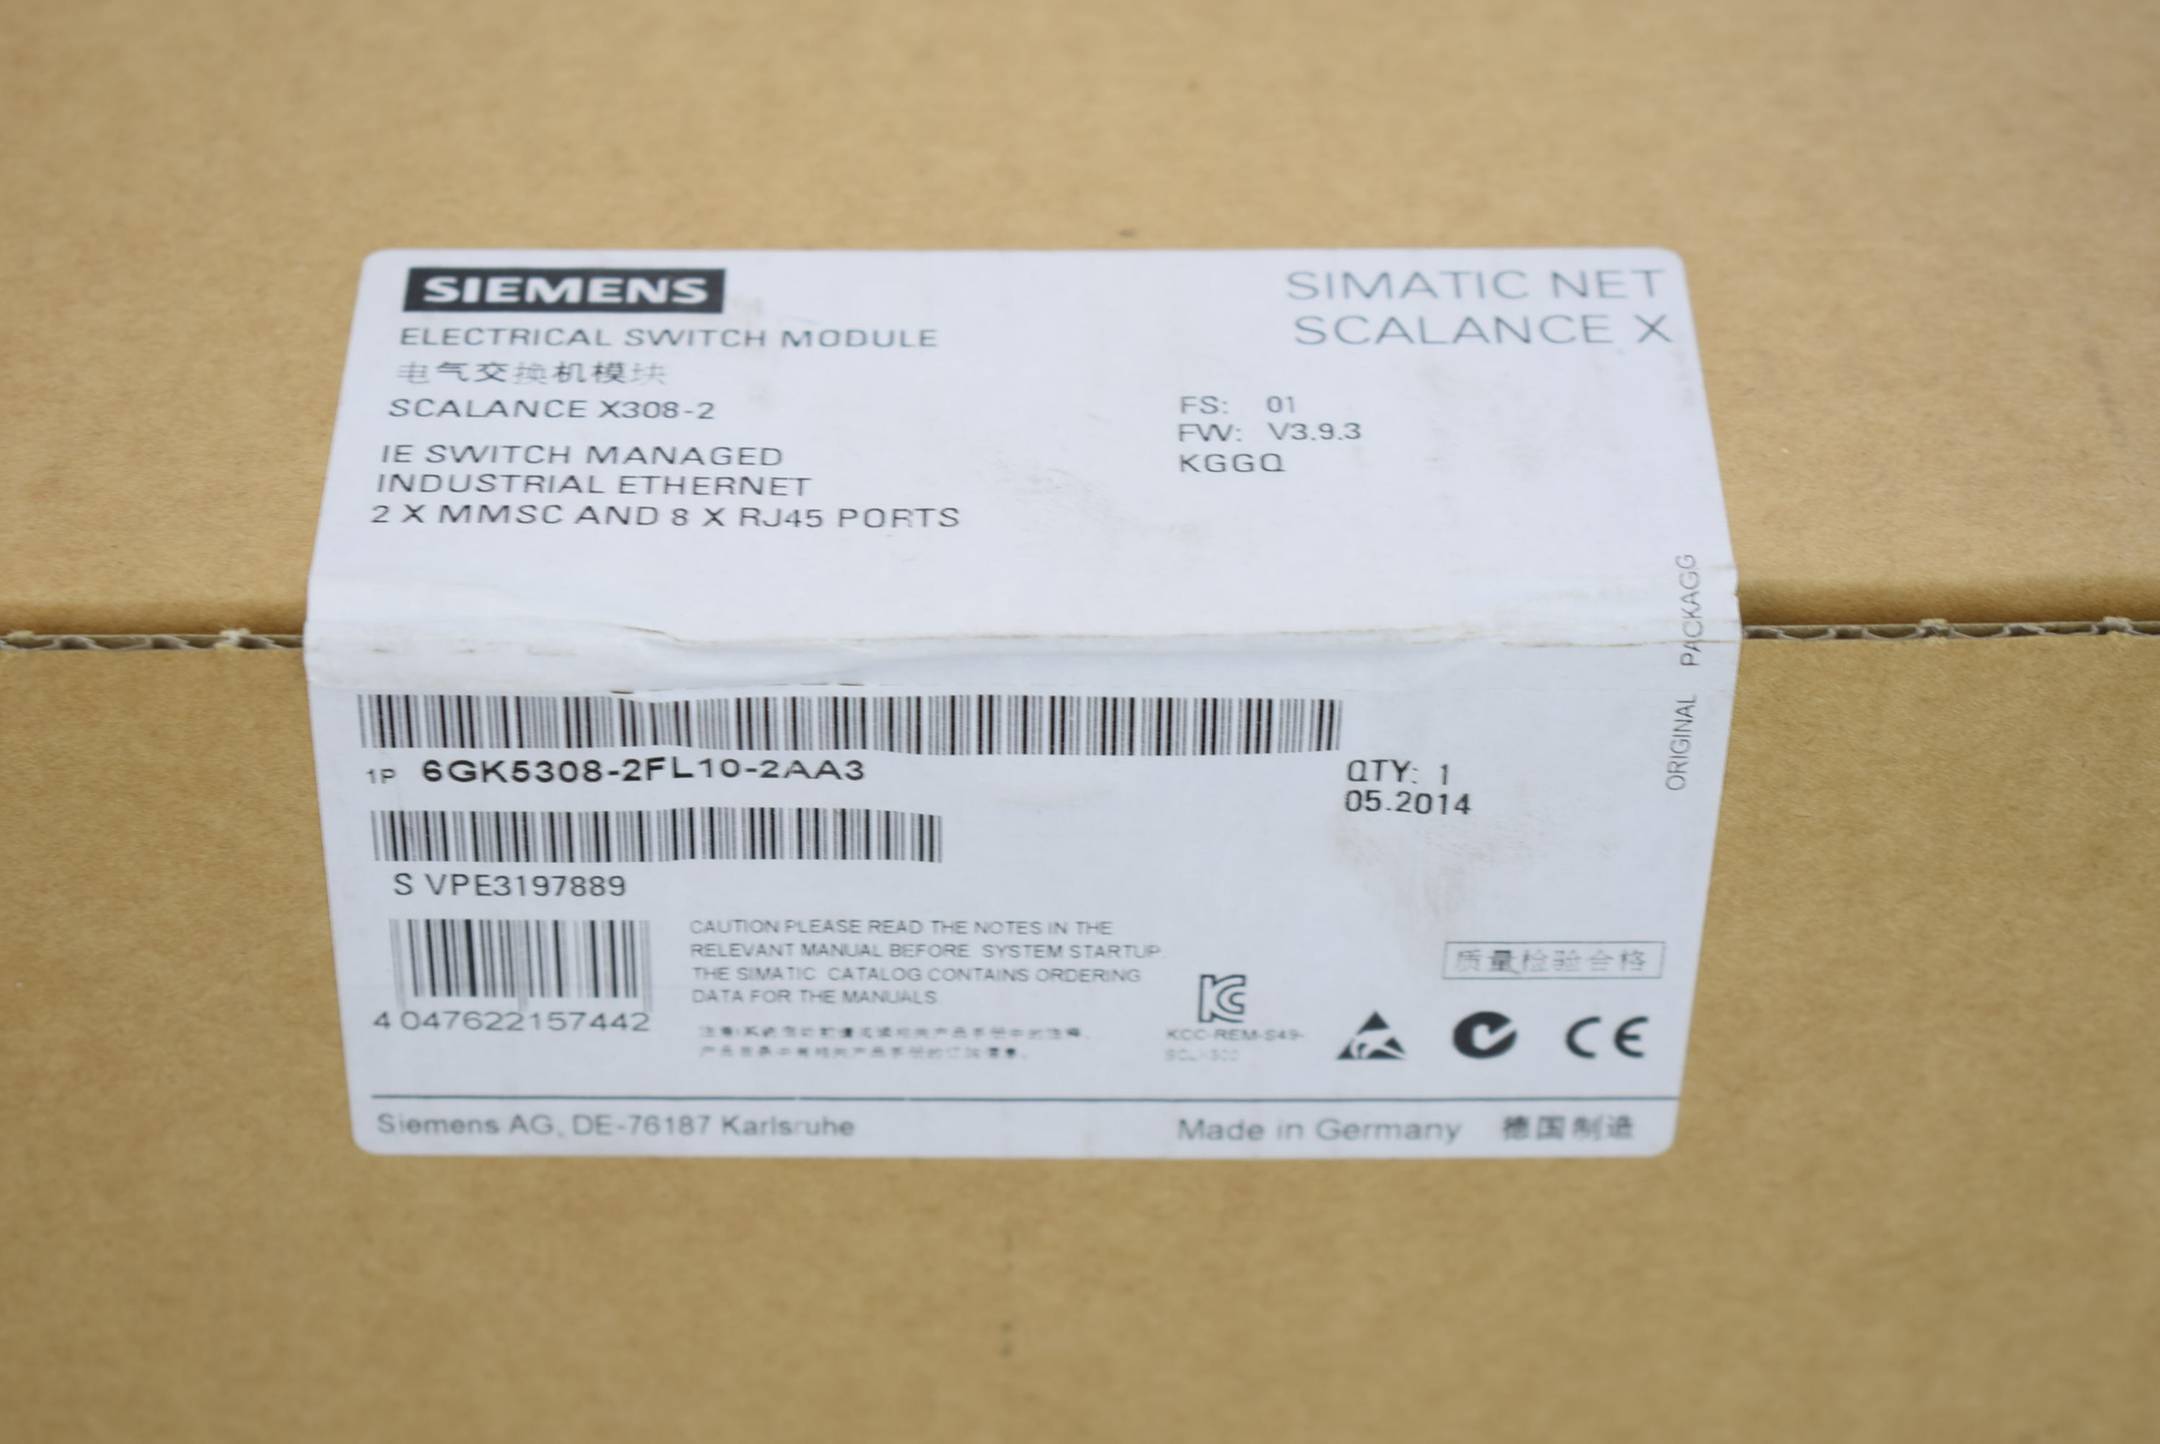 Siemens scalance switch X308-2 6GK5308-2FL10-2AA3 ( 6GK5 308-2FL10-2AA3 )